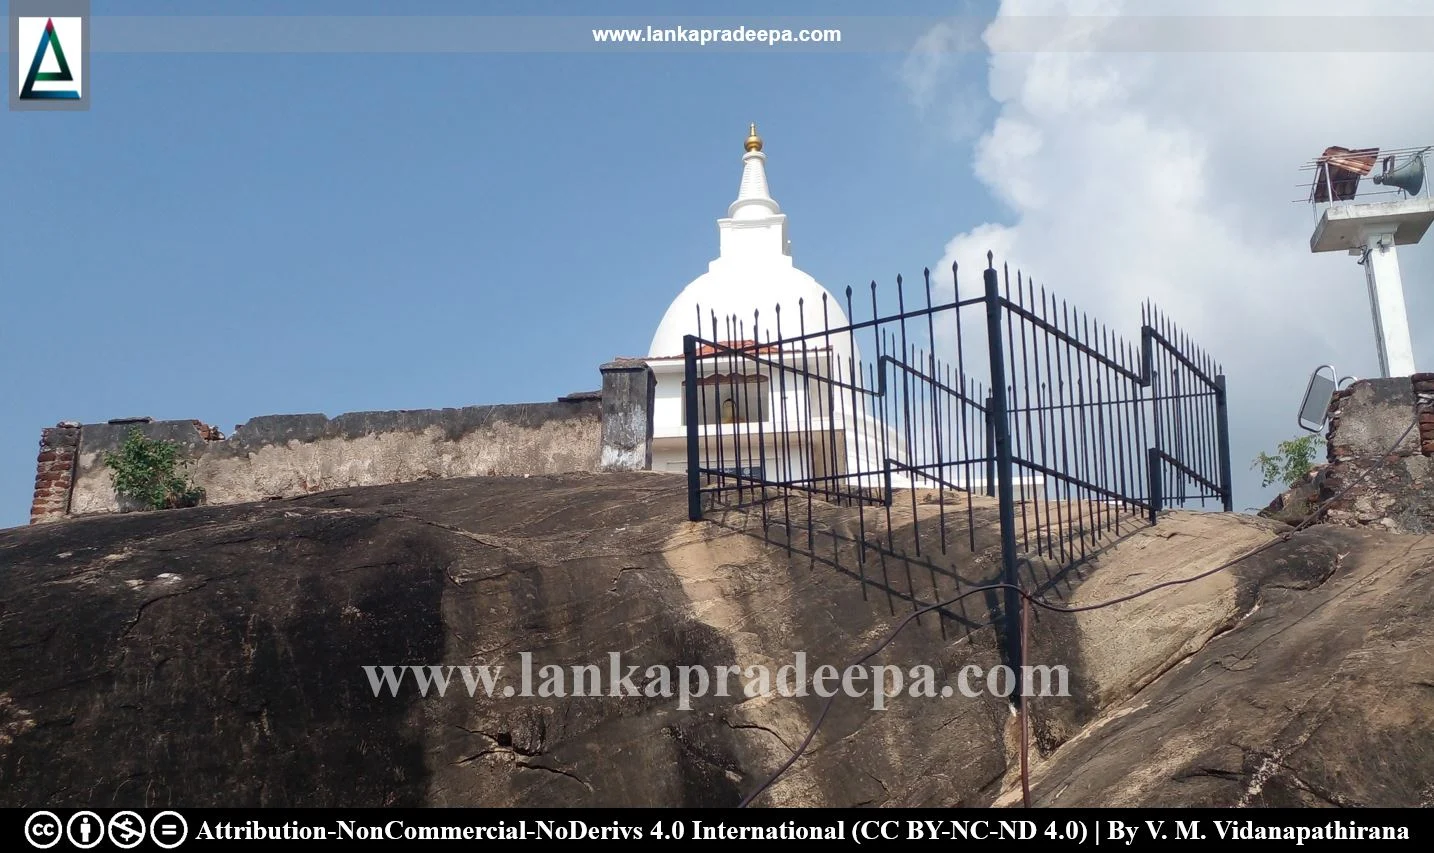 Kahandawa Dhammadinna Cave Temple